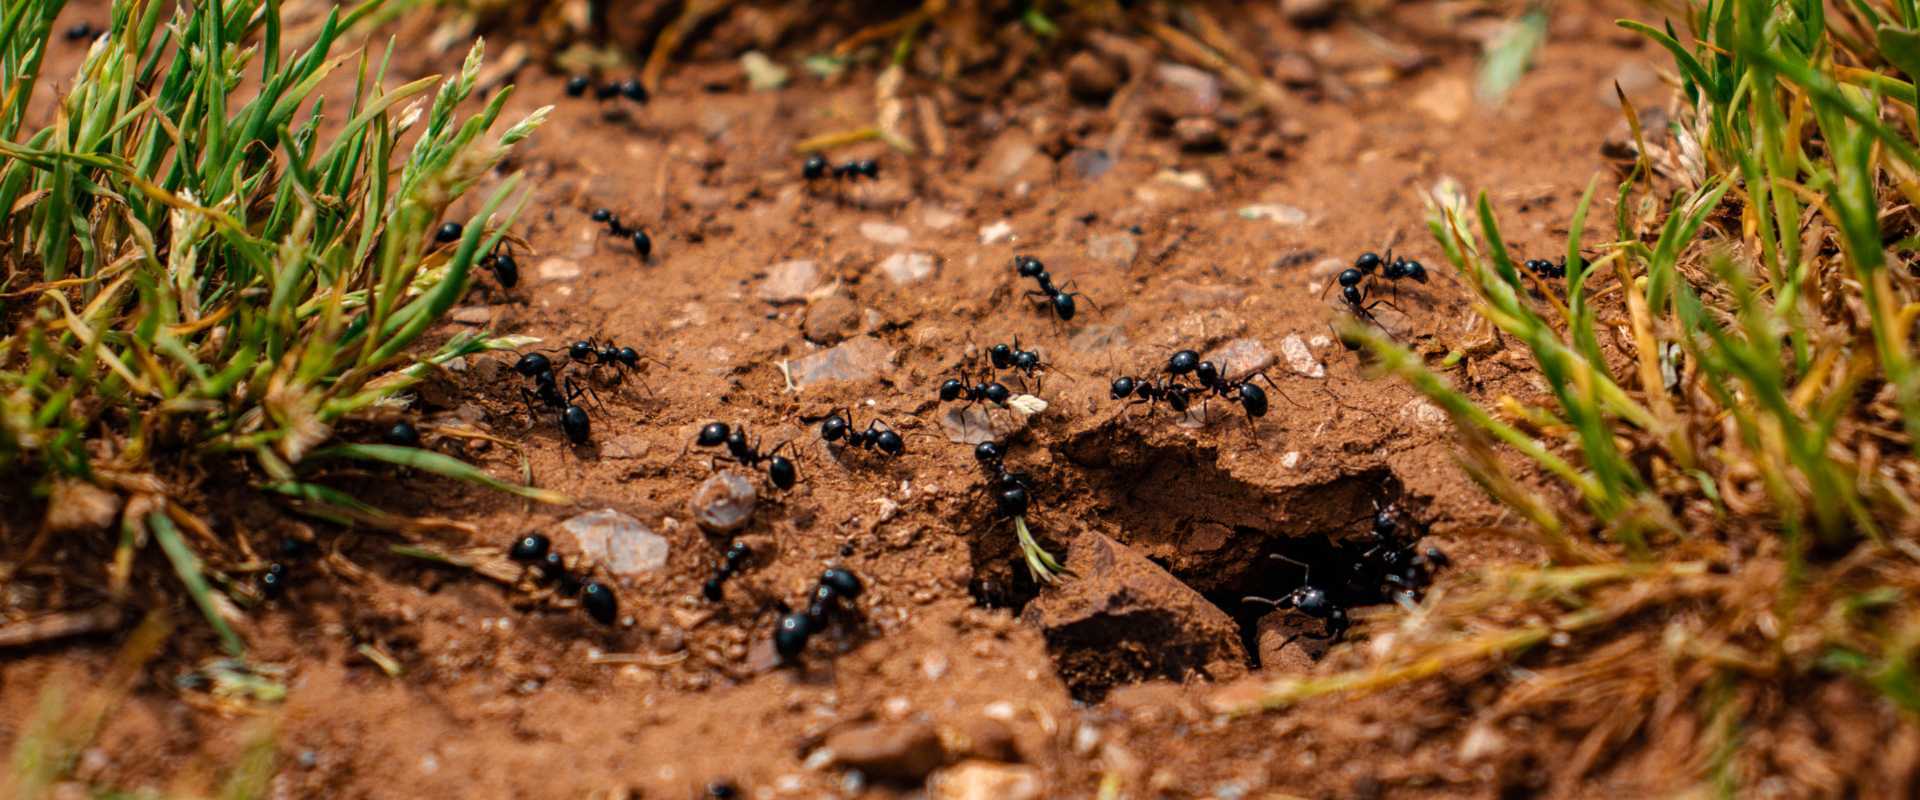 Ant Control In Hollywood FL